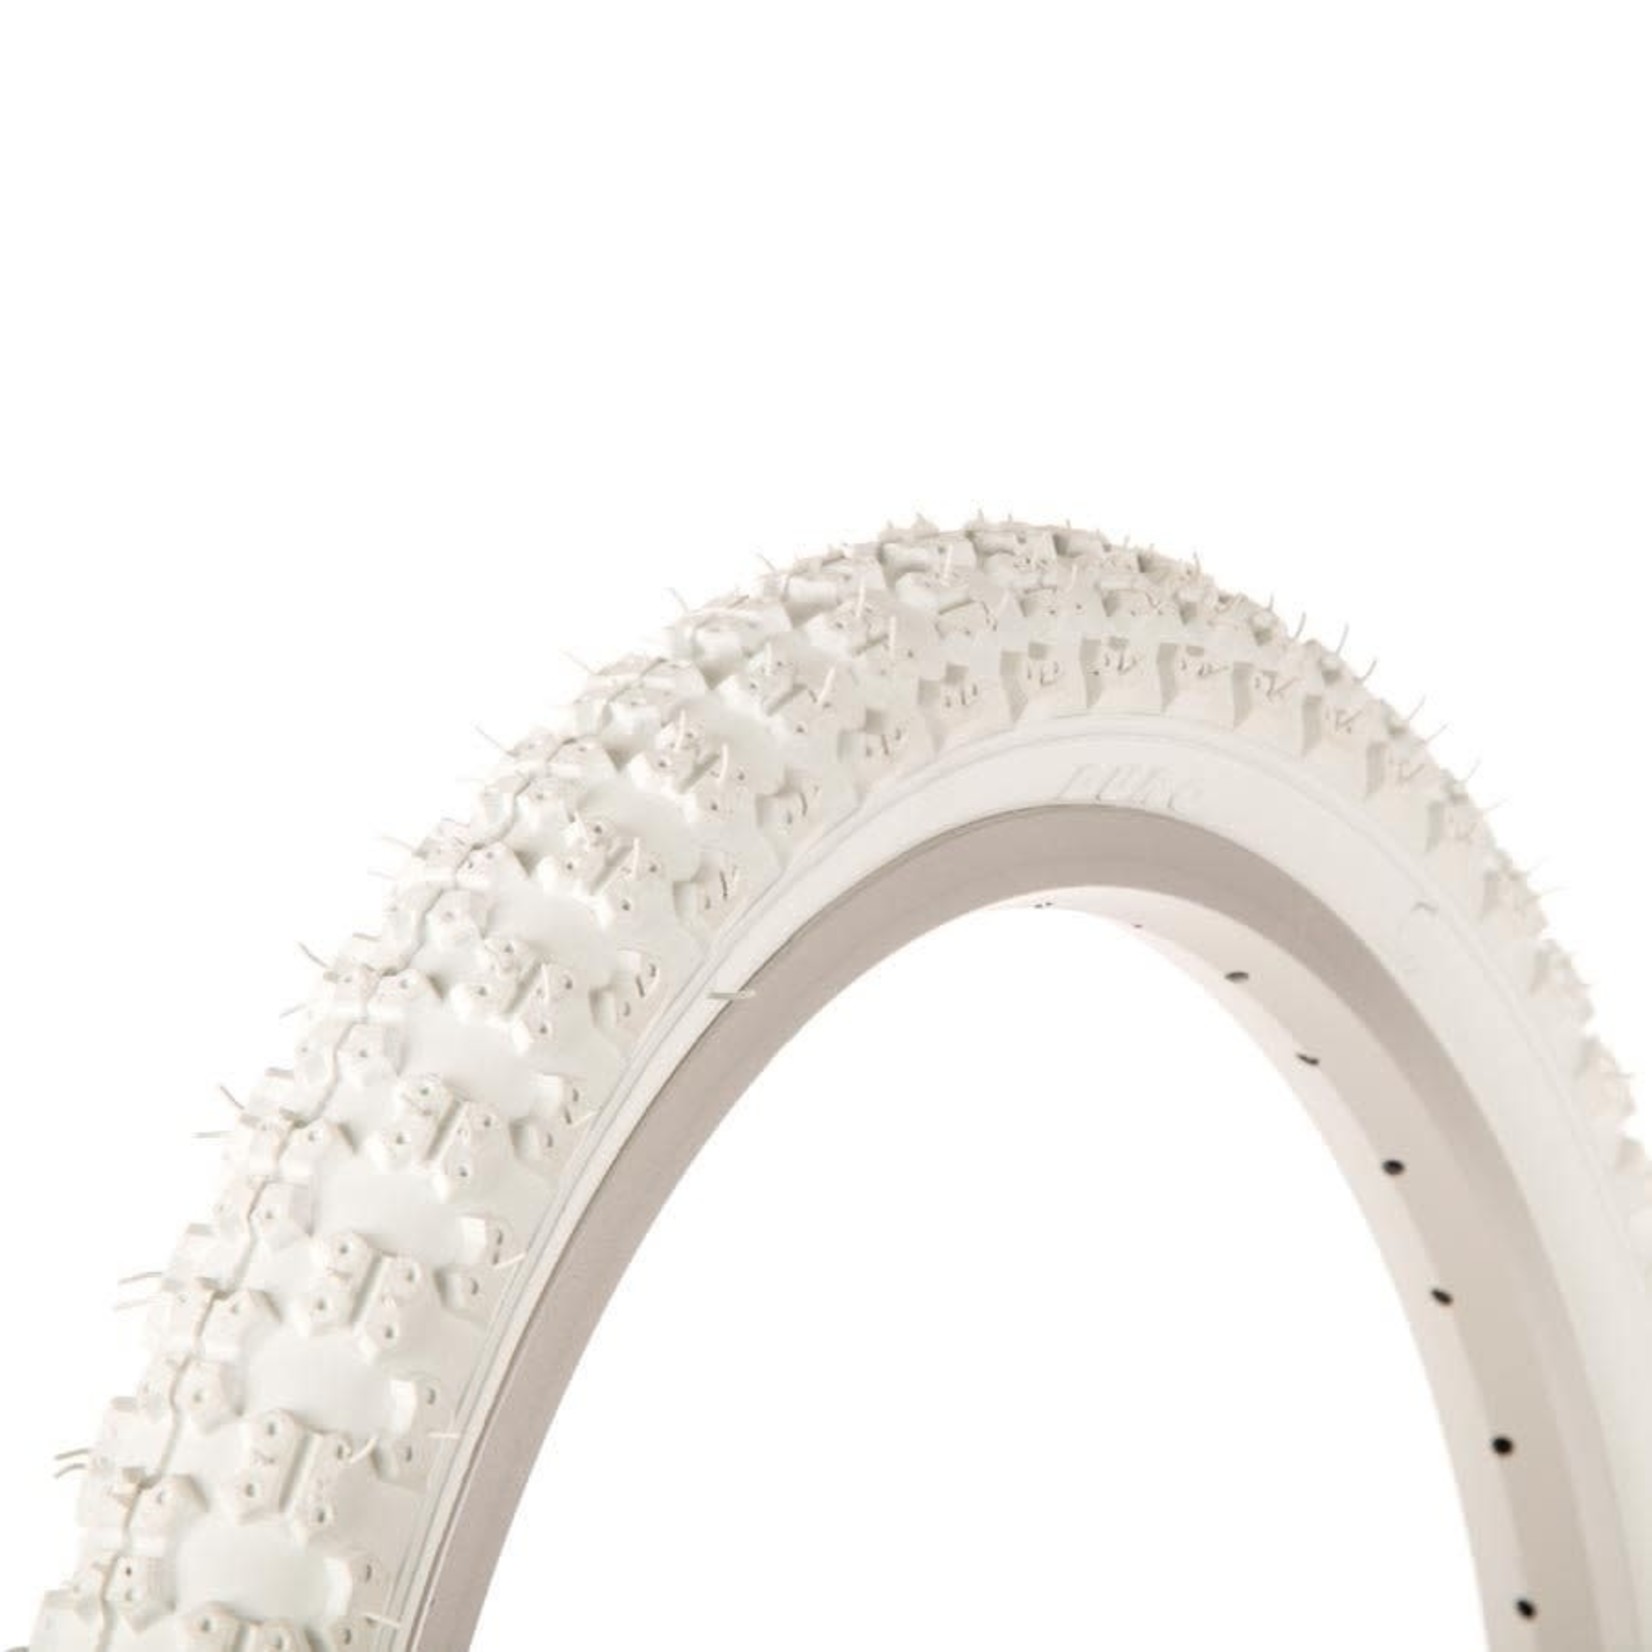 Evo Evo Bike Tire, Splash, 16” X 1.75”, Wire, Clincher